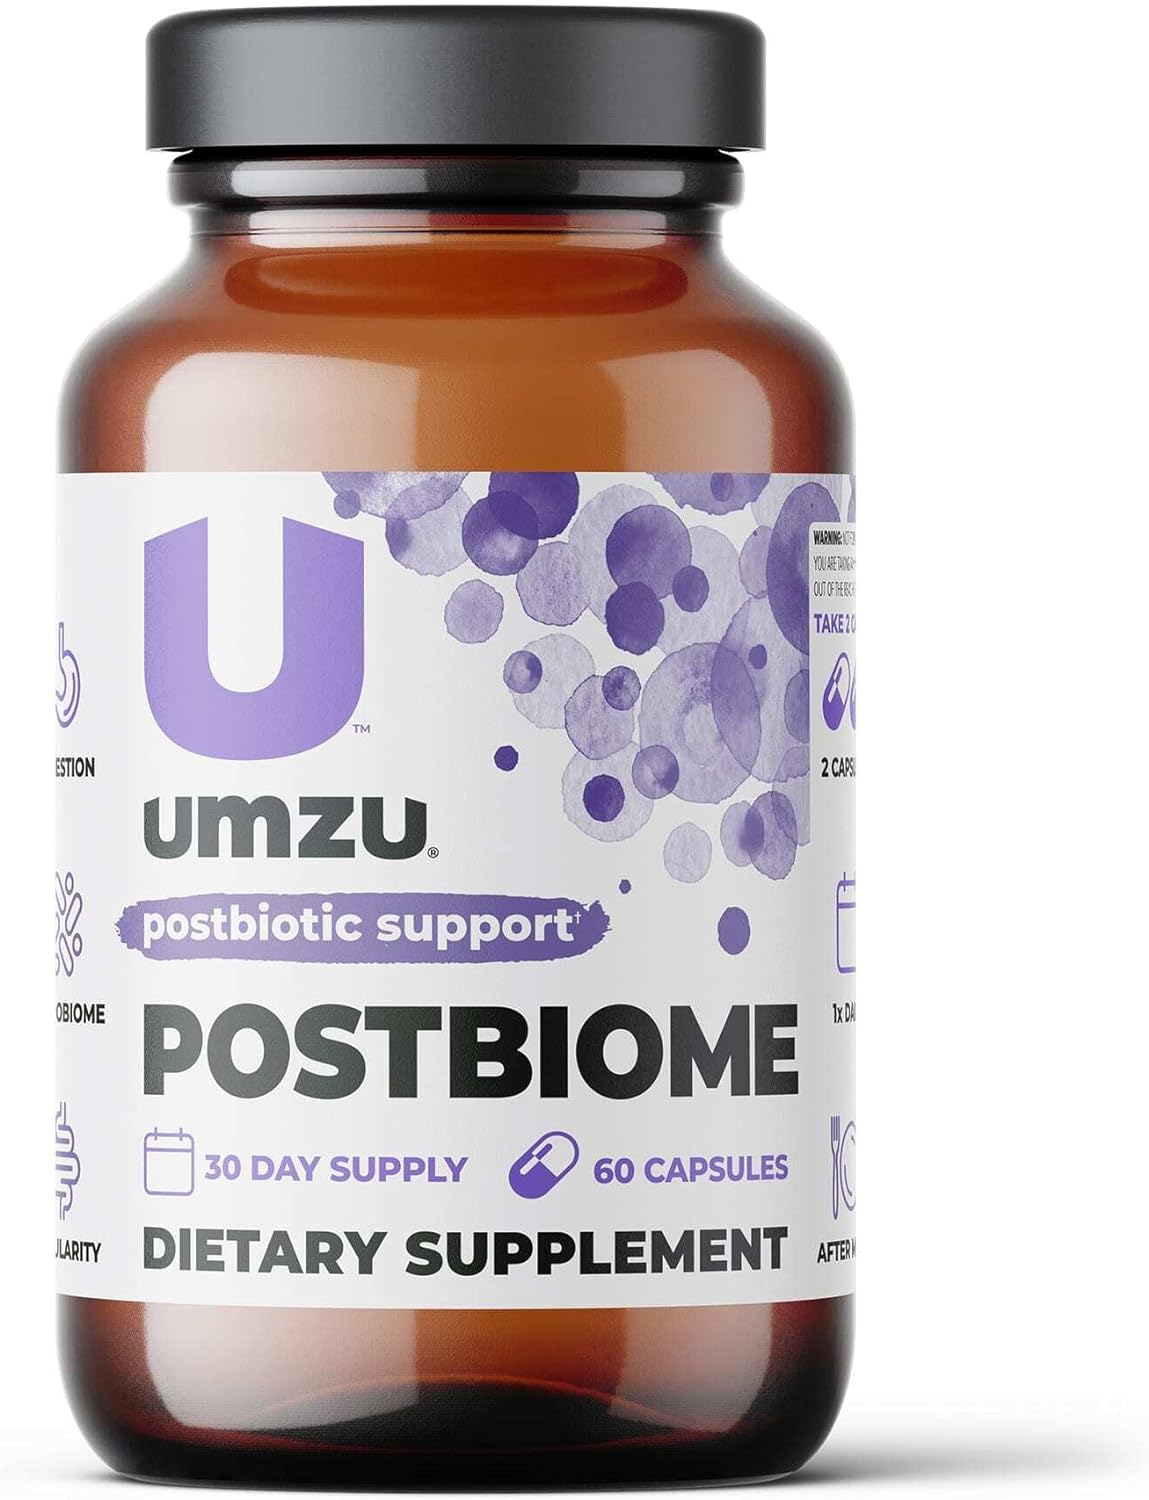 UMZU Postbiome - Postbiotic Supplement to Support Gut Health and Overa